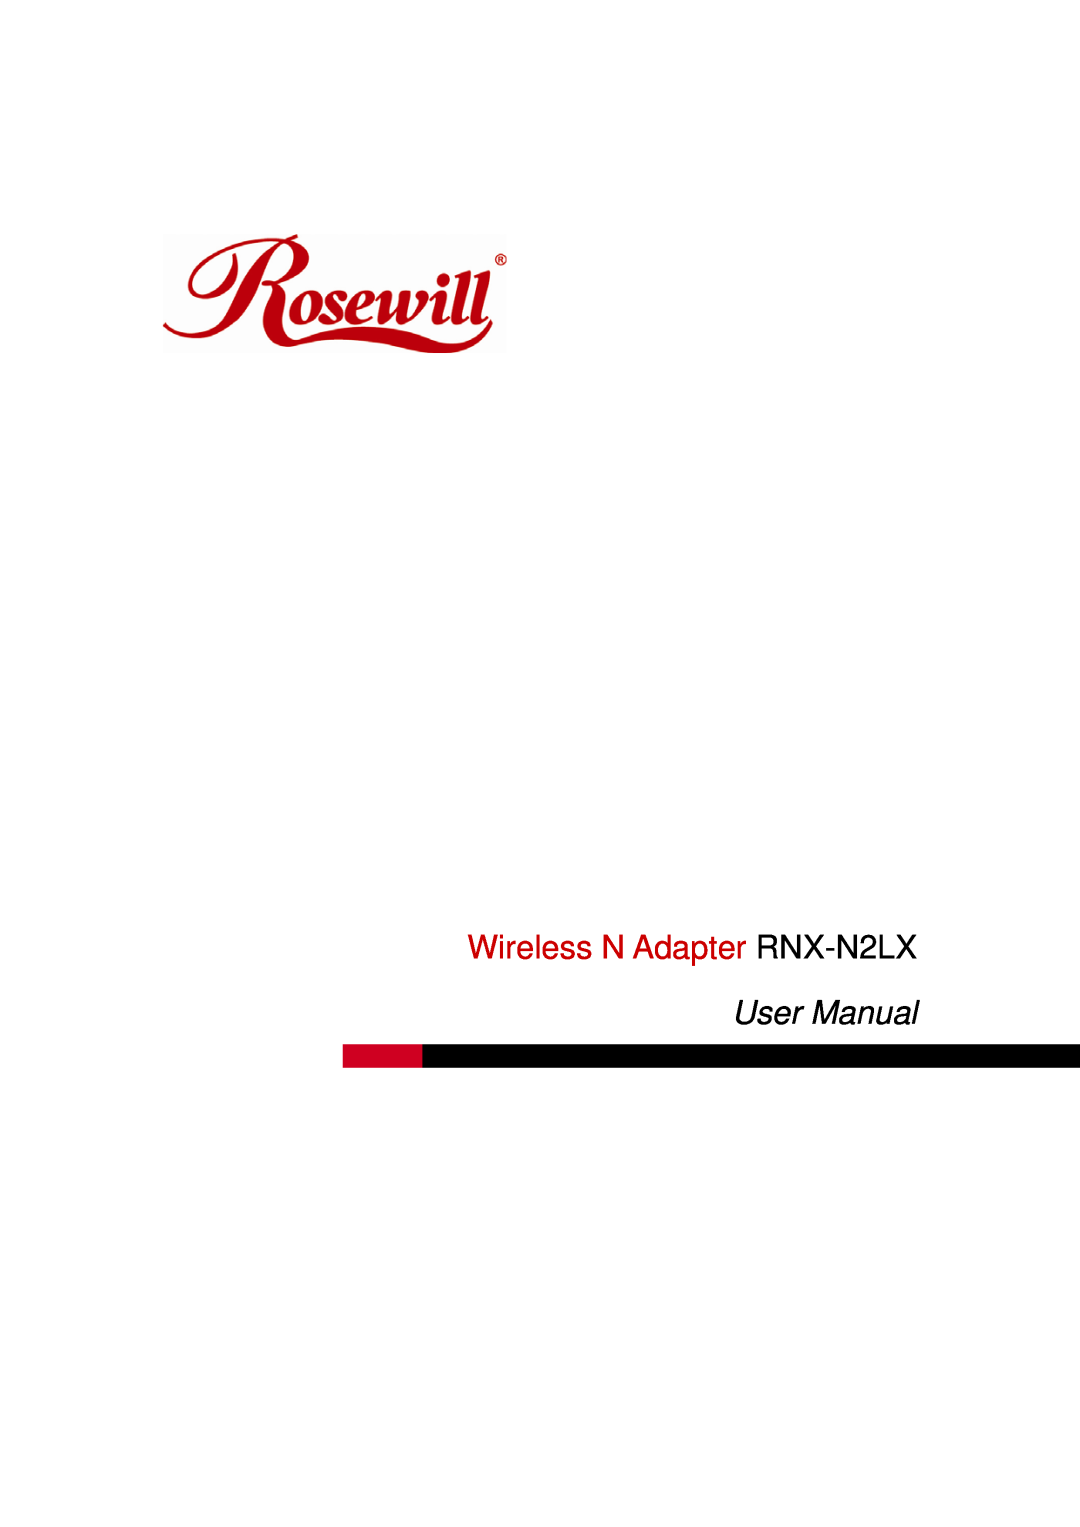 Rosewill user manual Wireless N Adapter RNX-N2LX 